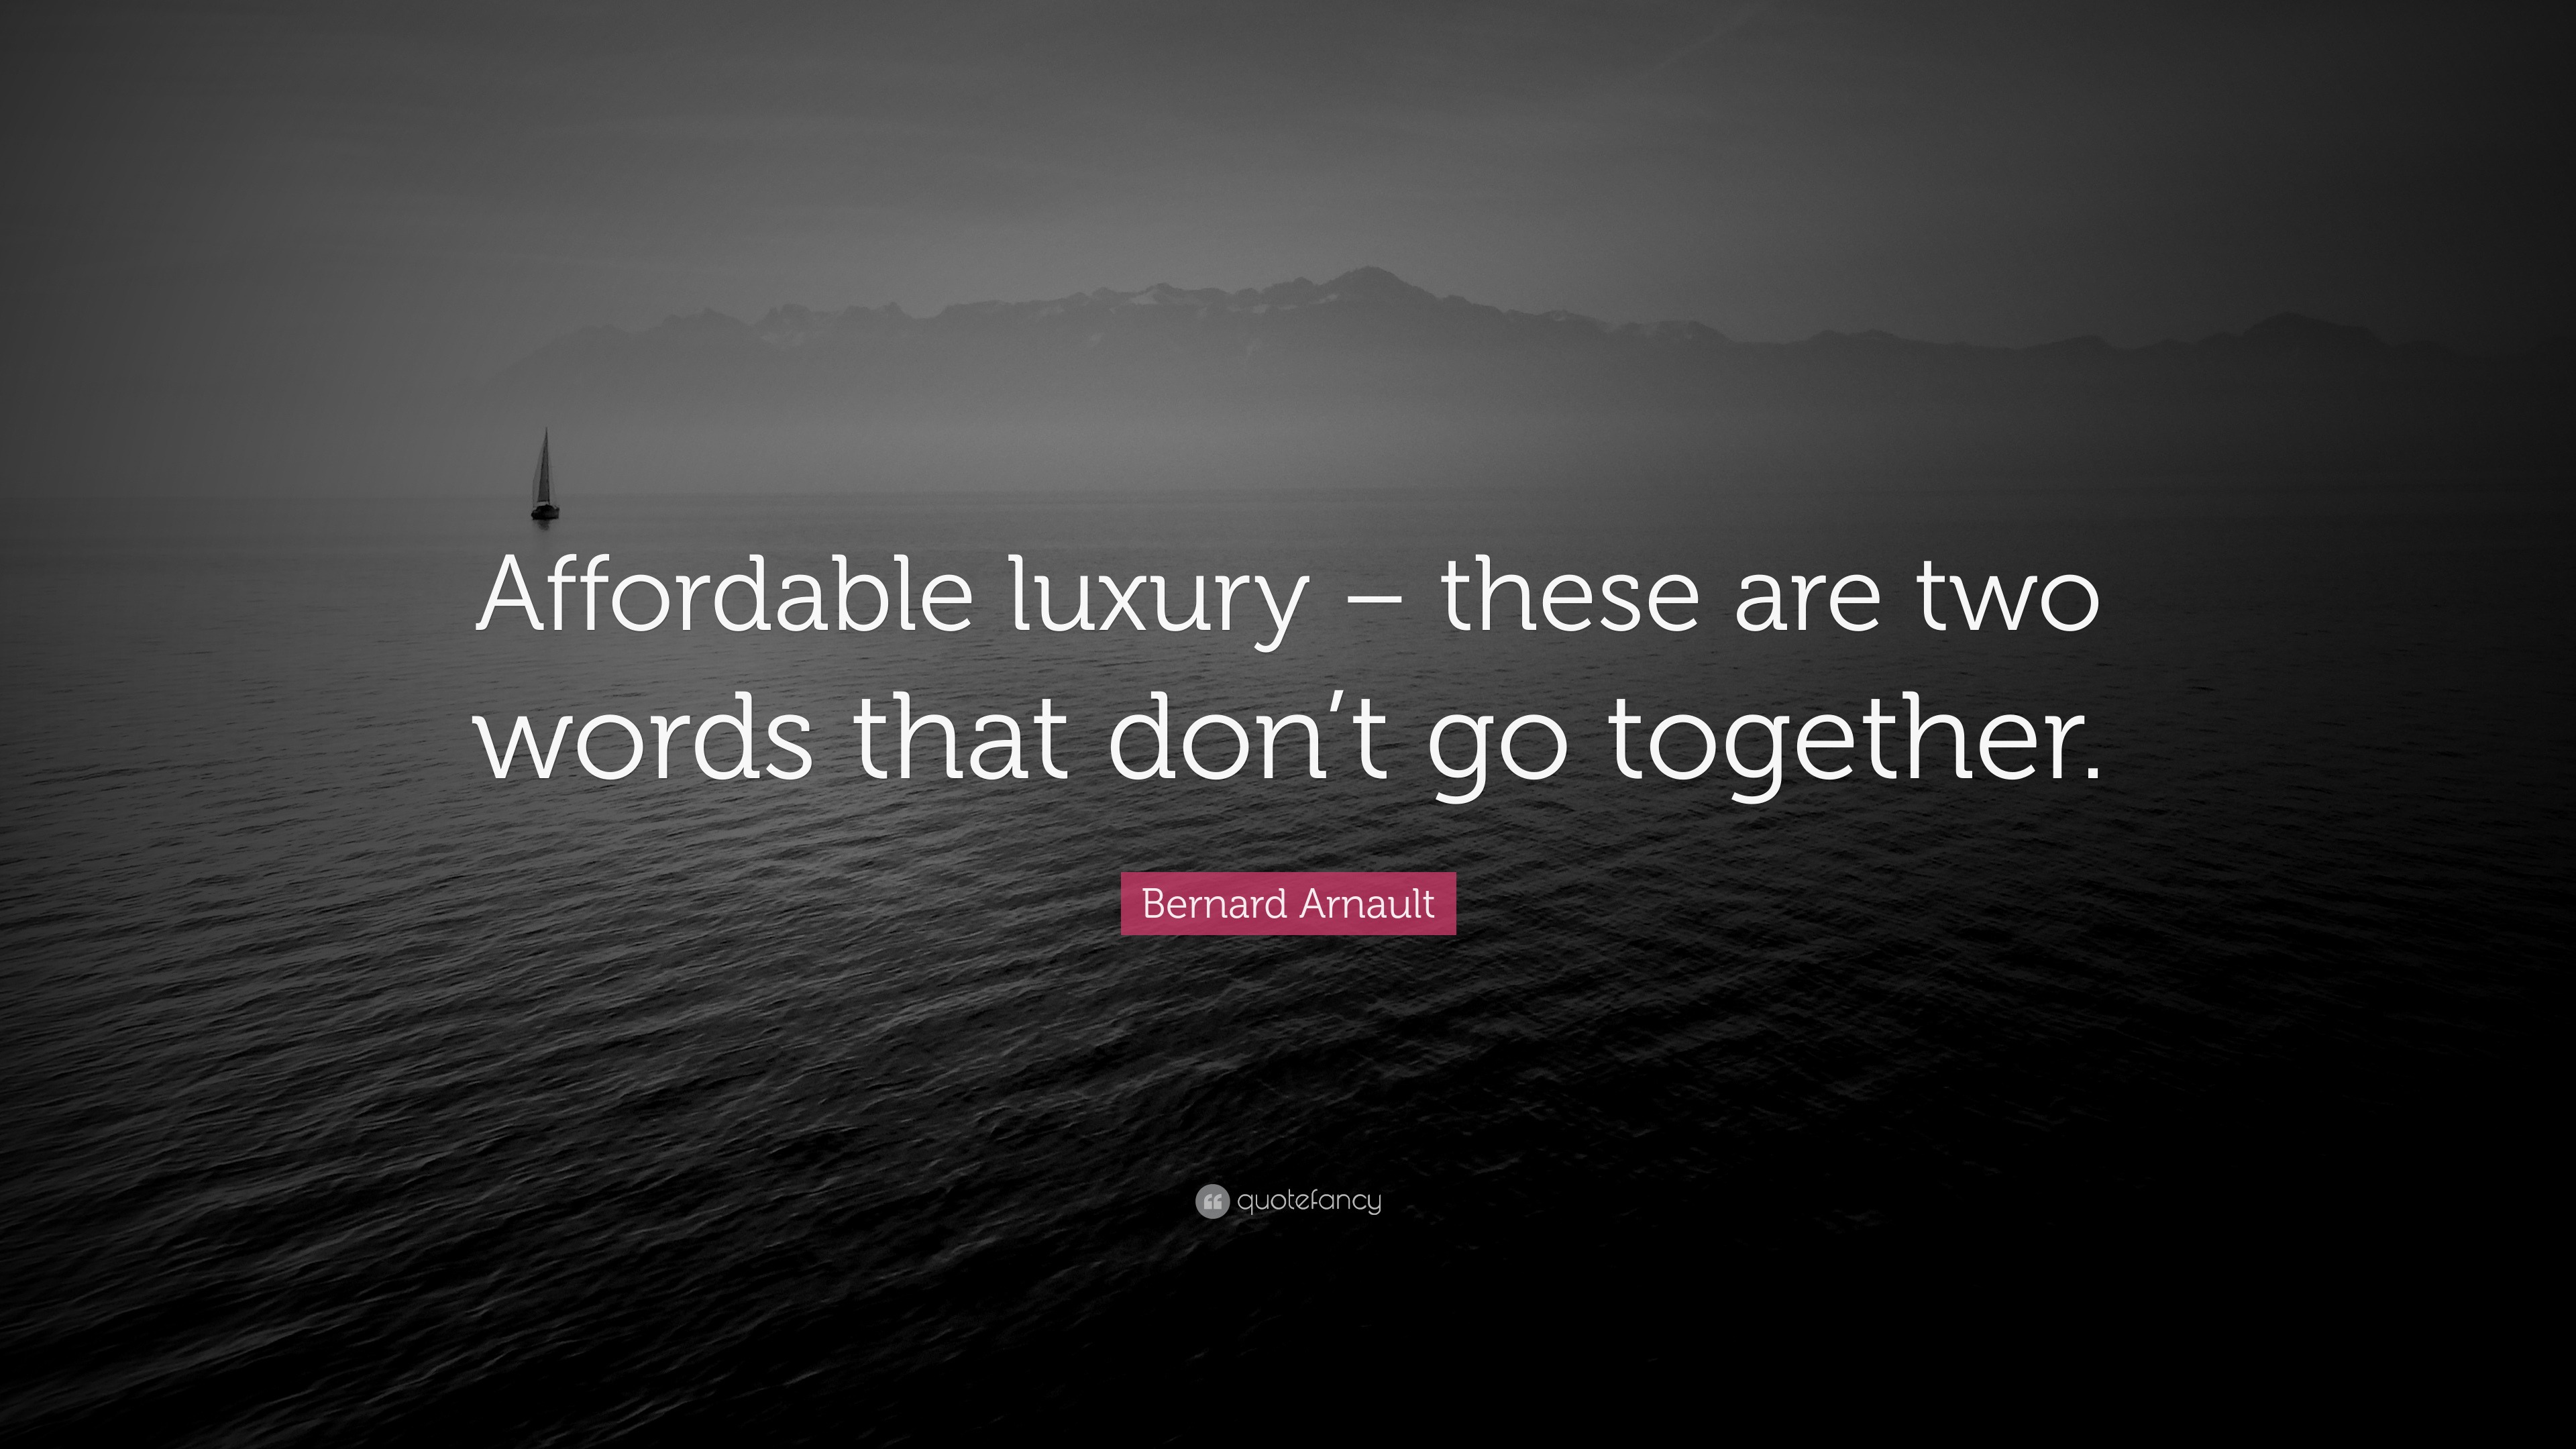 Bernard Arnault Quotes - Inspiration about Success, Business, and